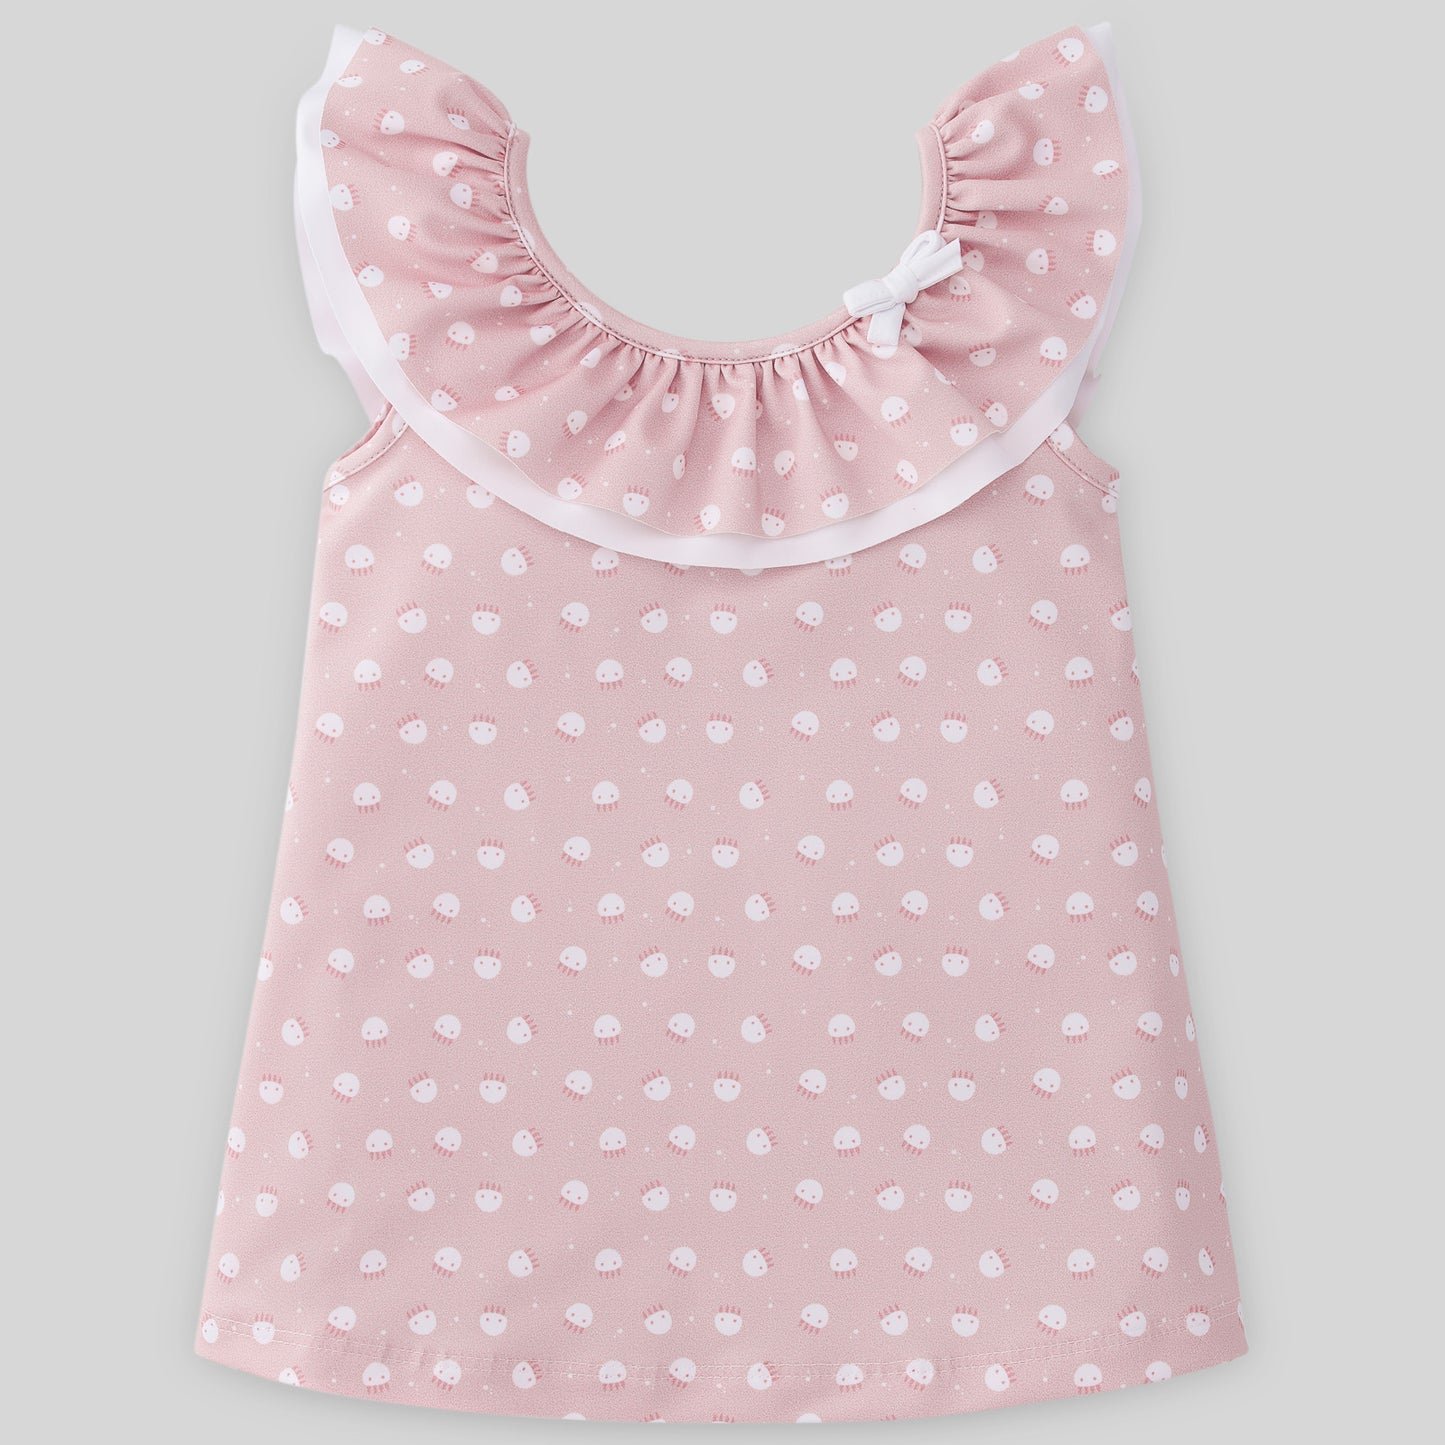 PAZ RODRIGUEZ Pink-White Jellyfish patterned dress